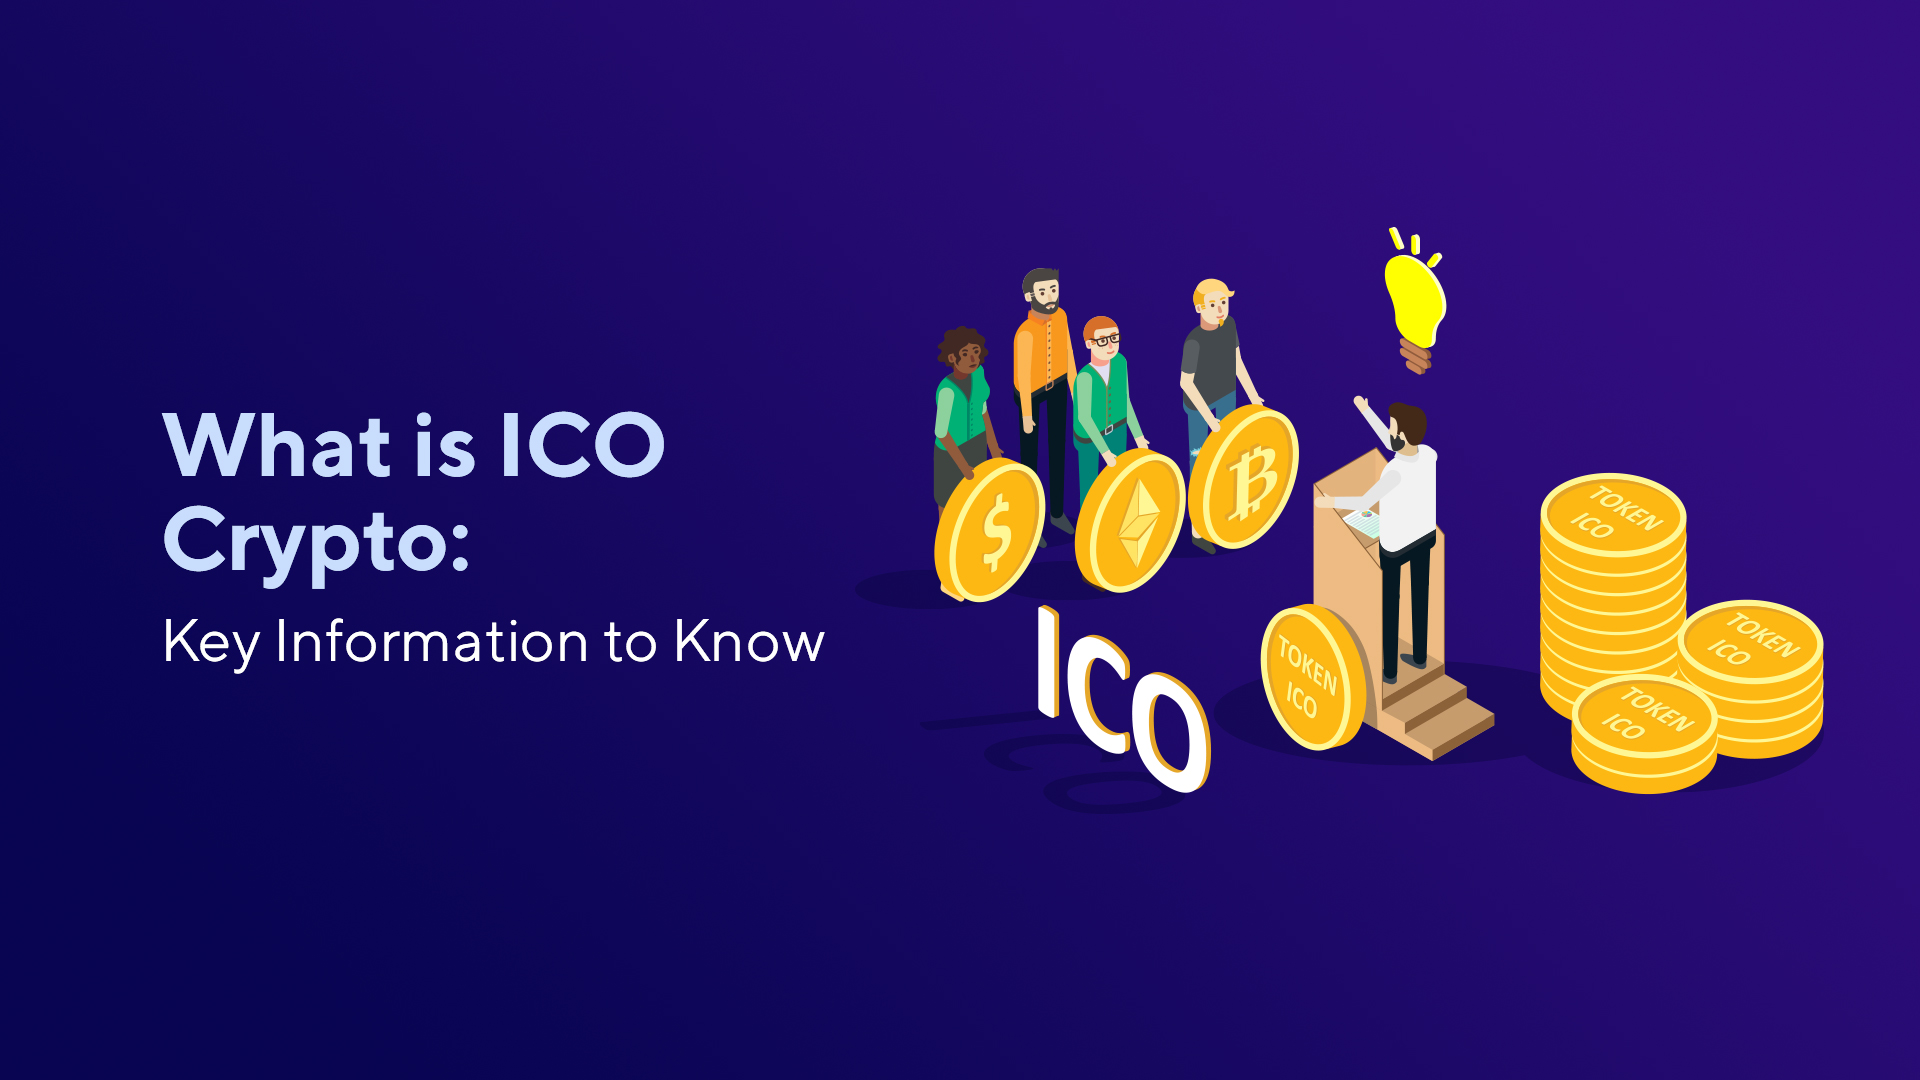 ico ico cryptocurrency